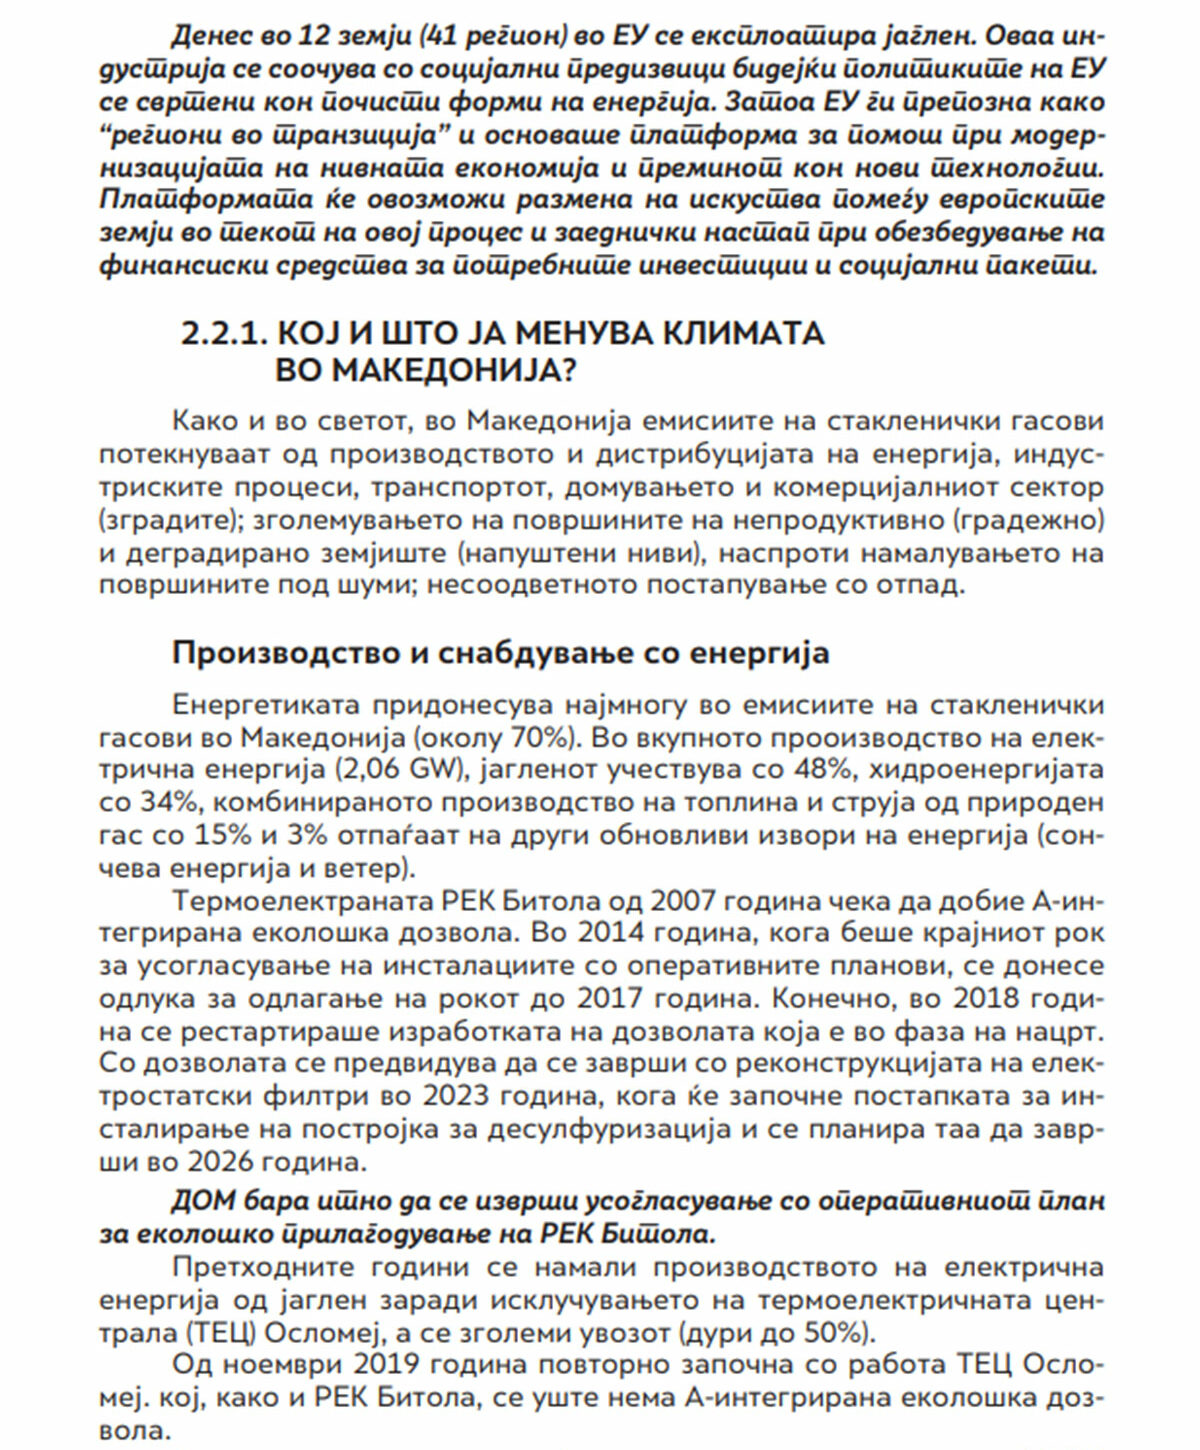 zelenata tranzicija dolg pat za makedonija so prazni vetuvanja i nenauceni lekcii 12